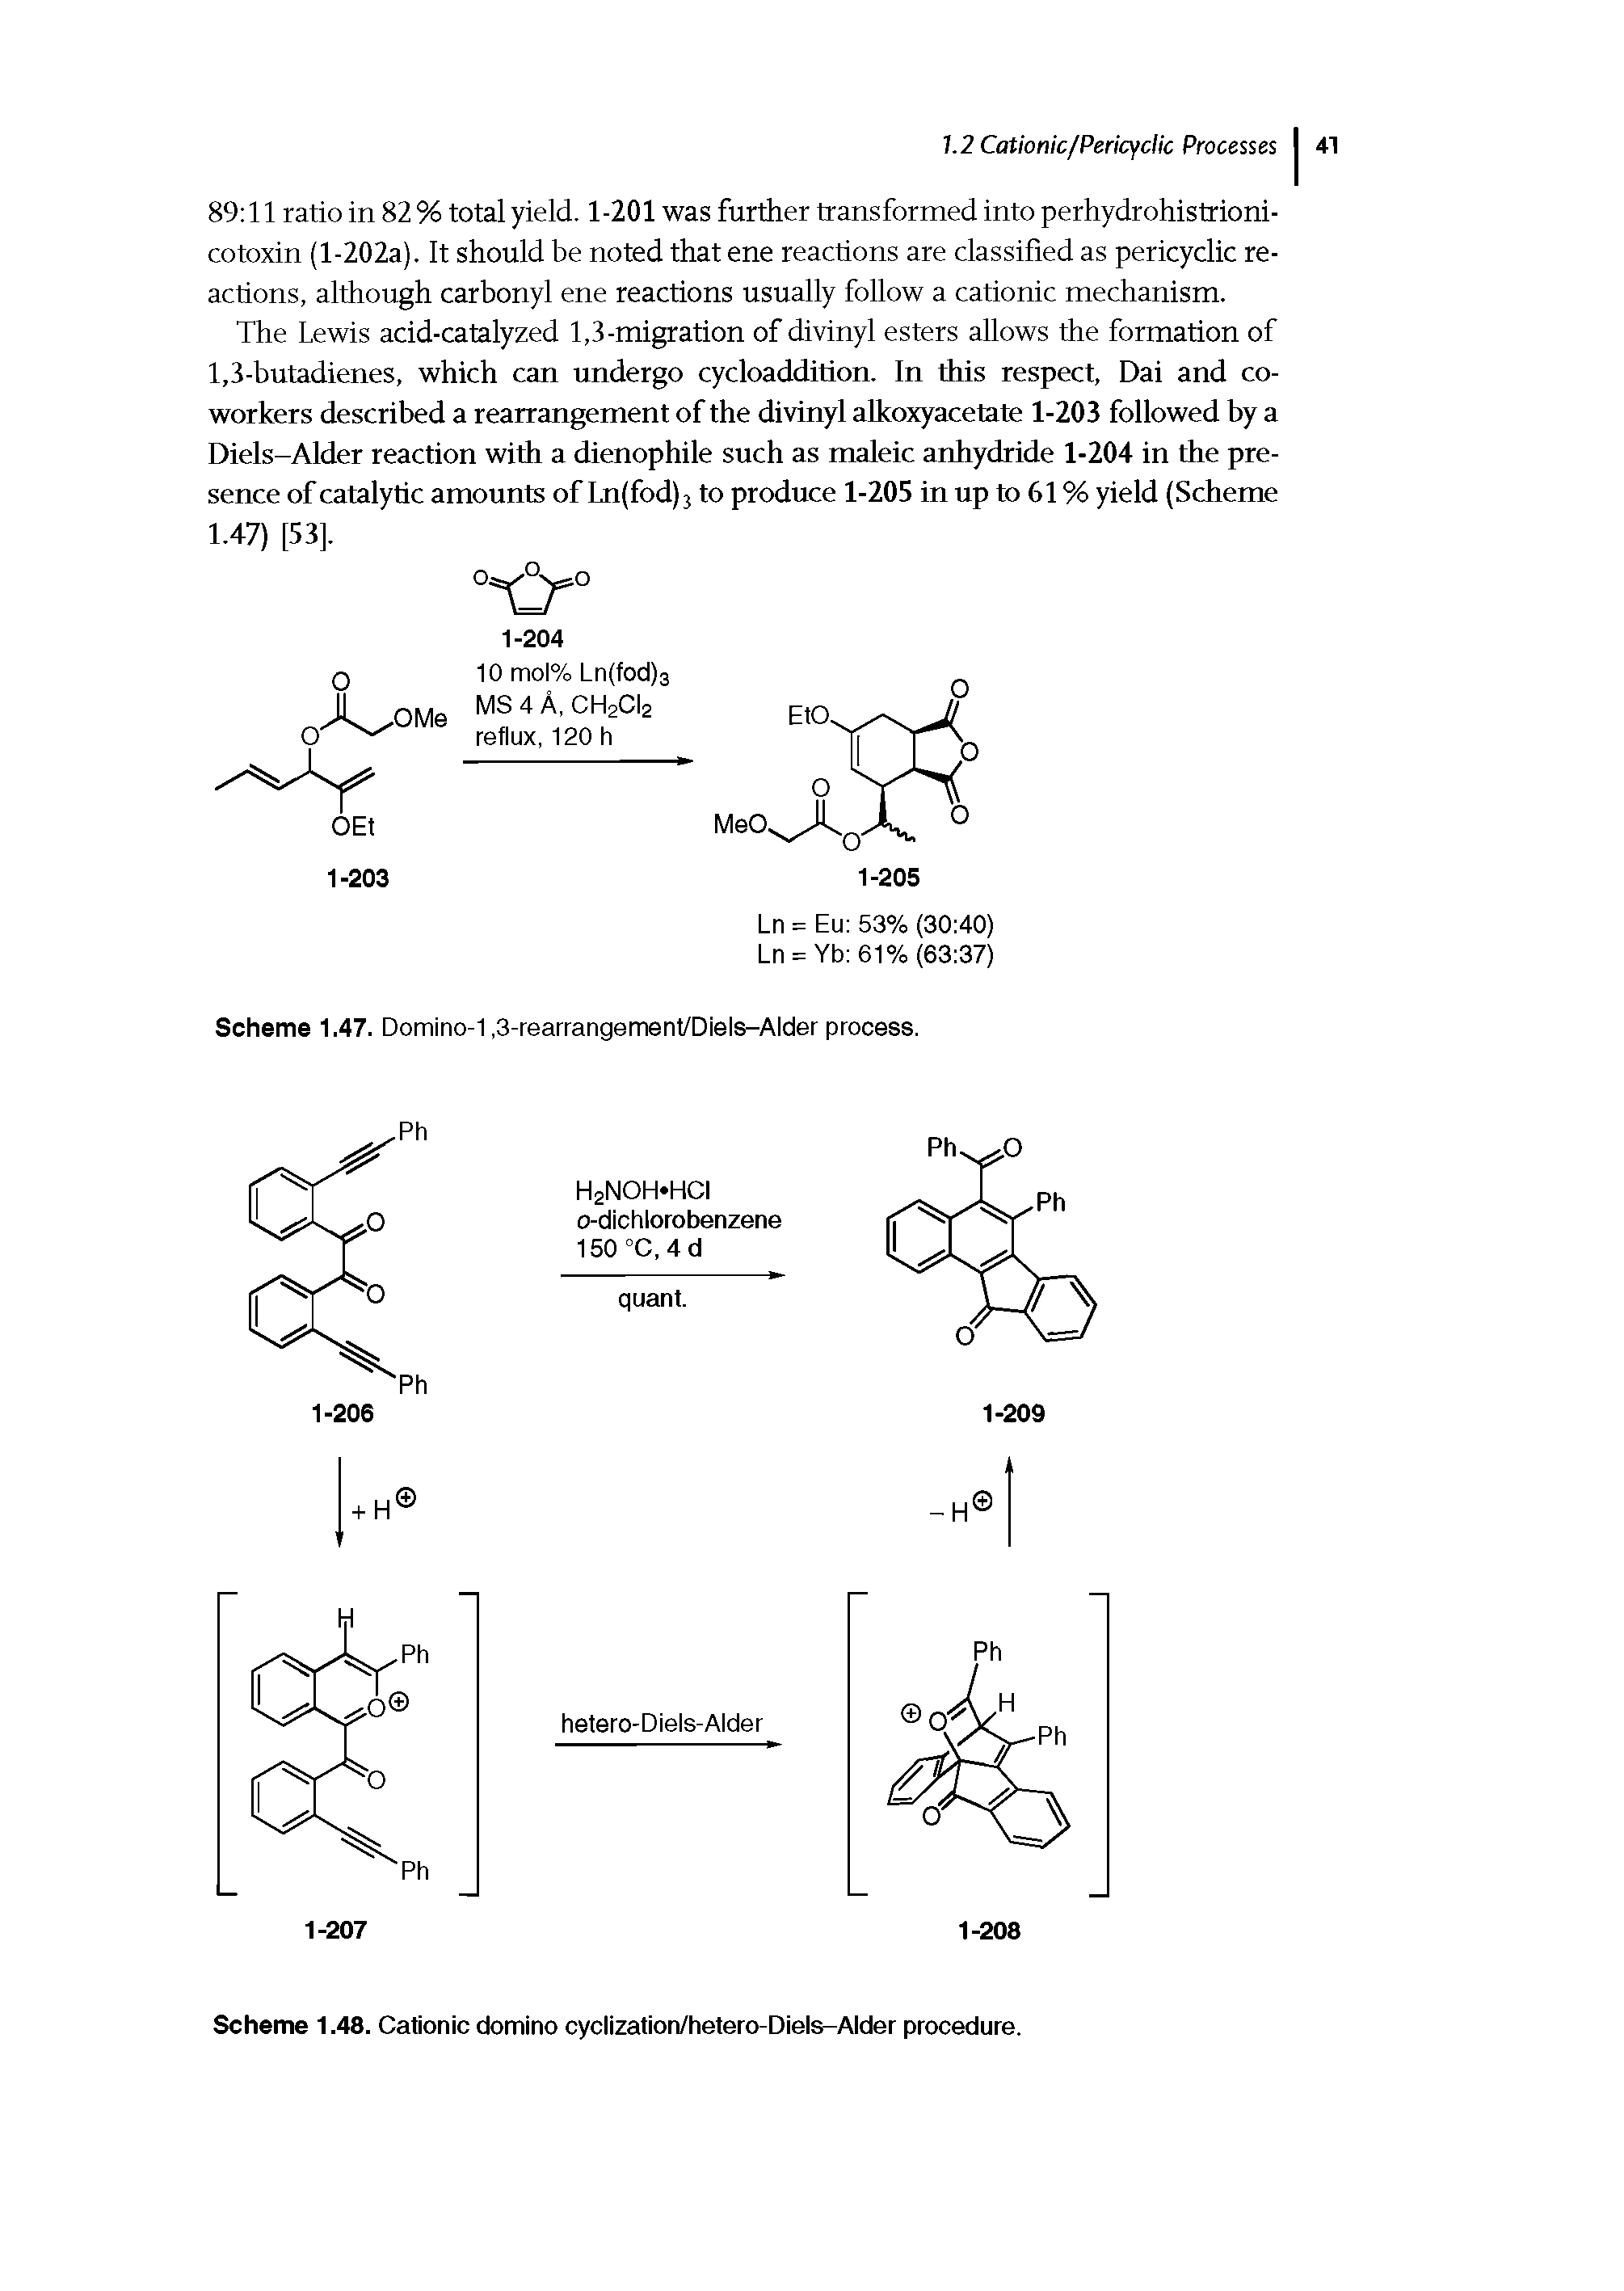 Scheme 1.48. Cationic domino cyclization/hetero-Diels-Alder procedure.